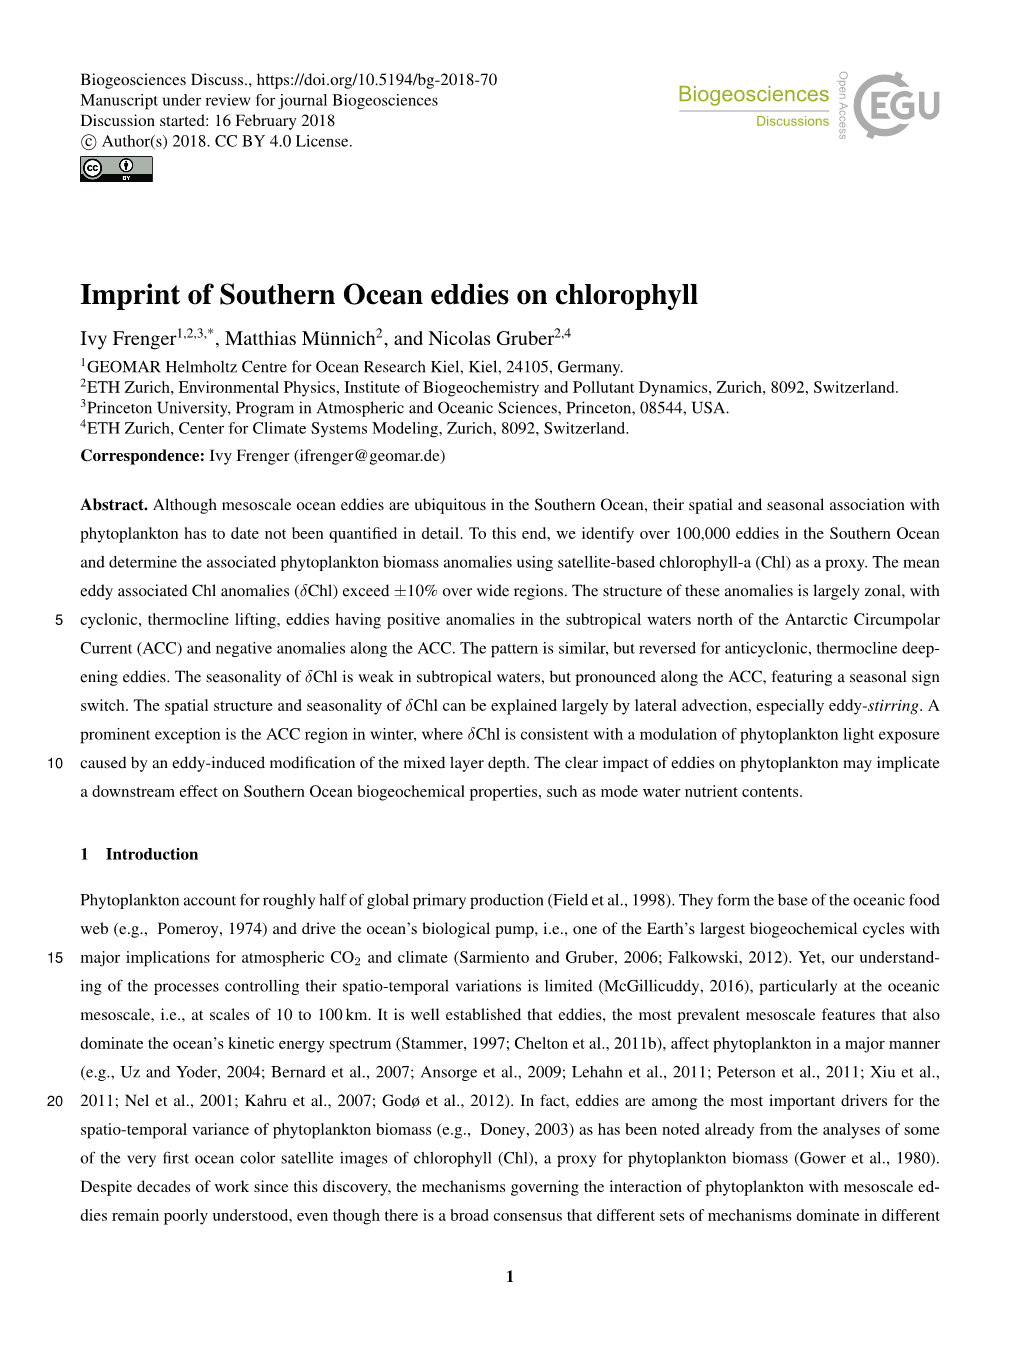 Imprint of Southern Ocean Eddies on Chlorophyll